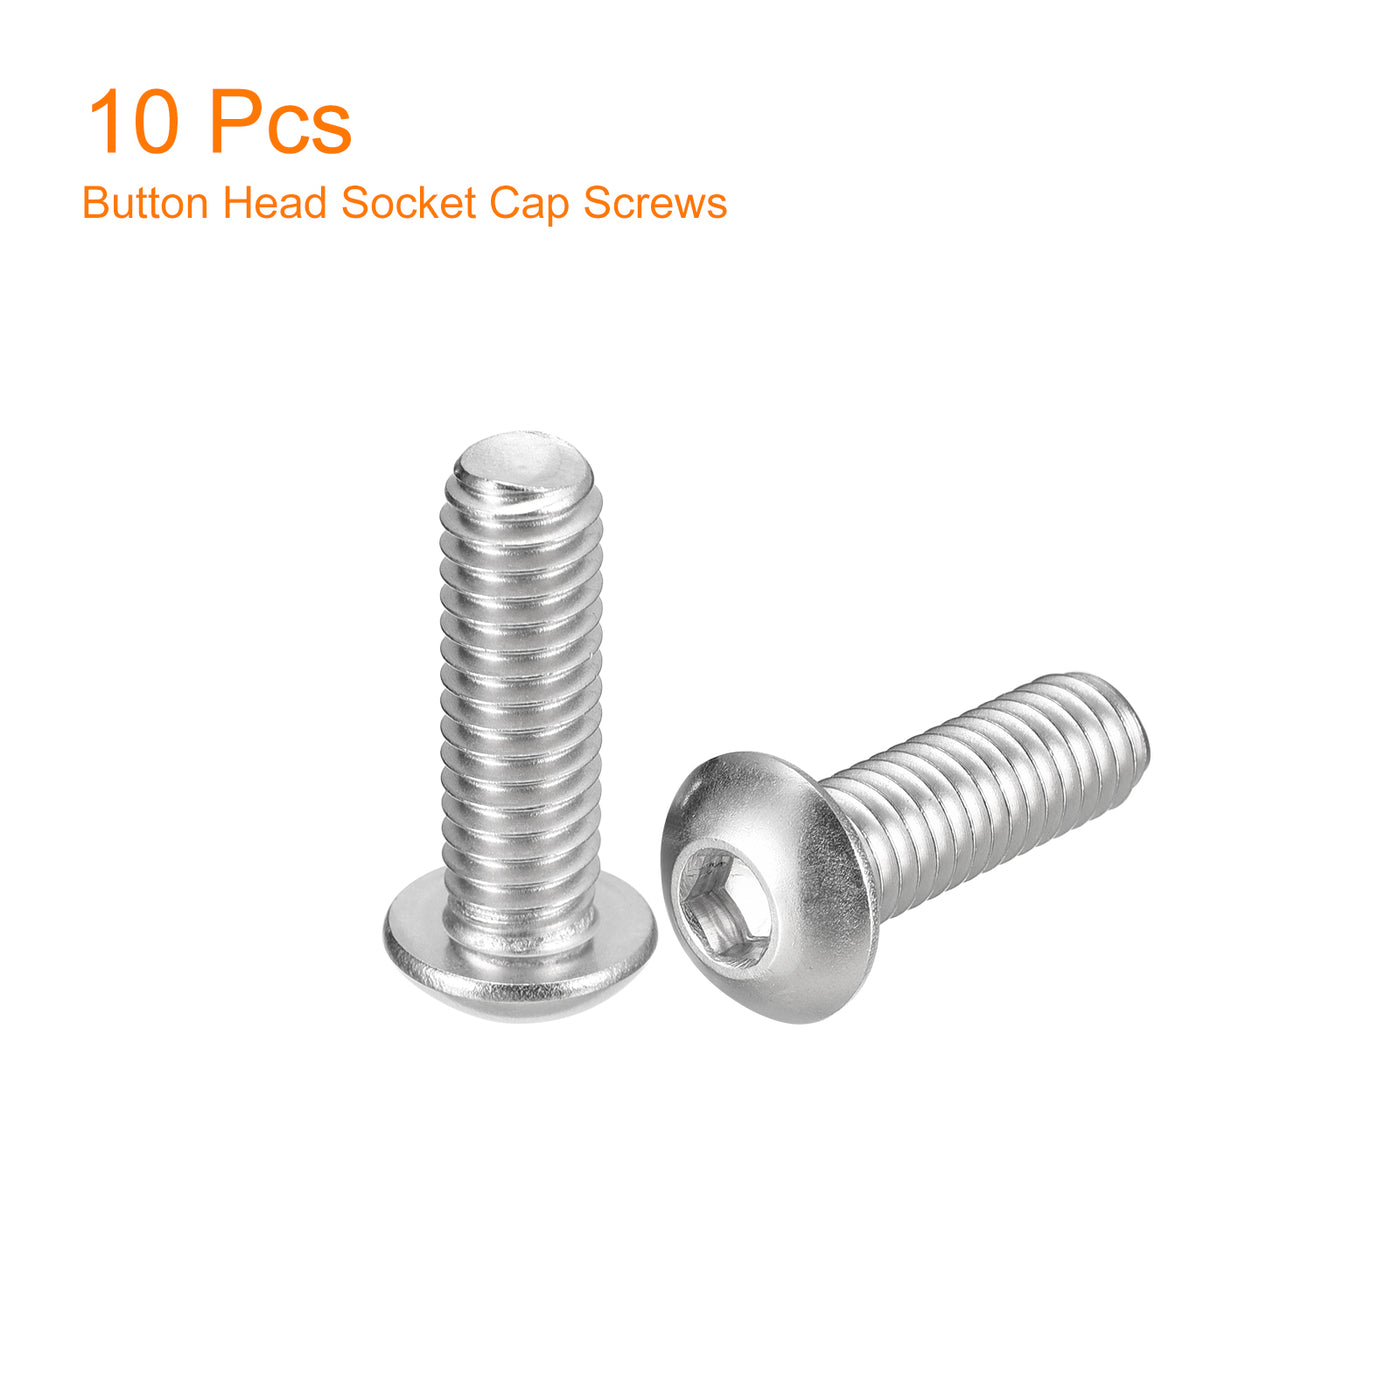 uxcell Uxcell 5/16-18x1" Button Head Socket Cap Screws, 10pcs 304 Stainless Steel Screws